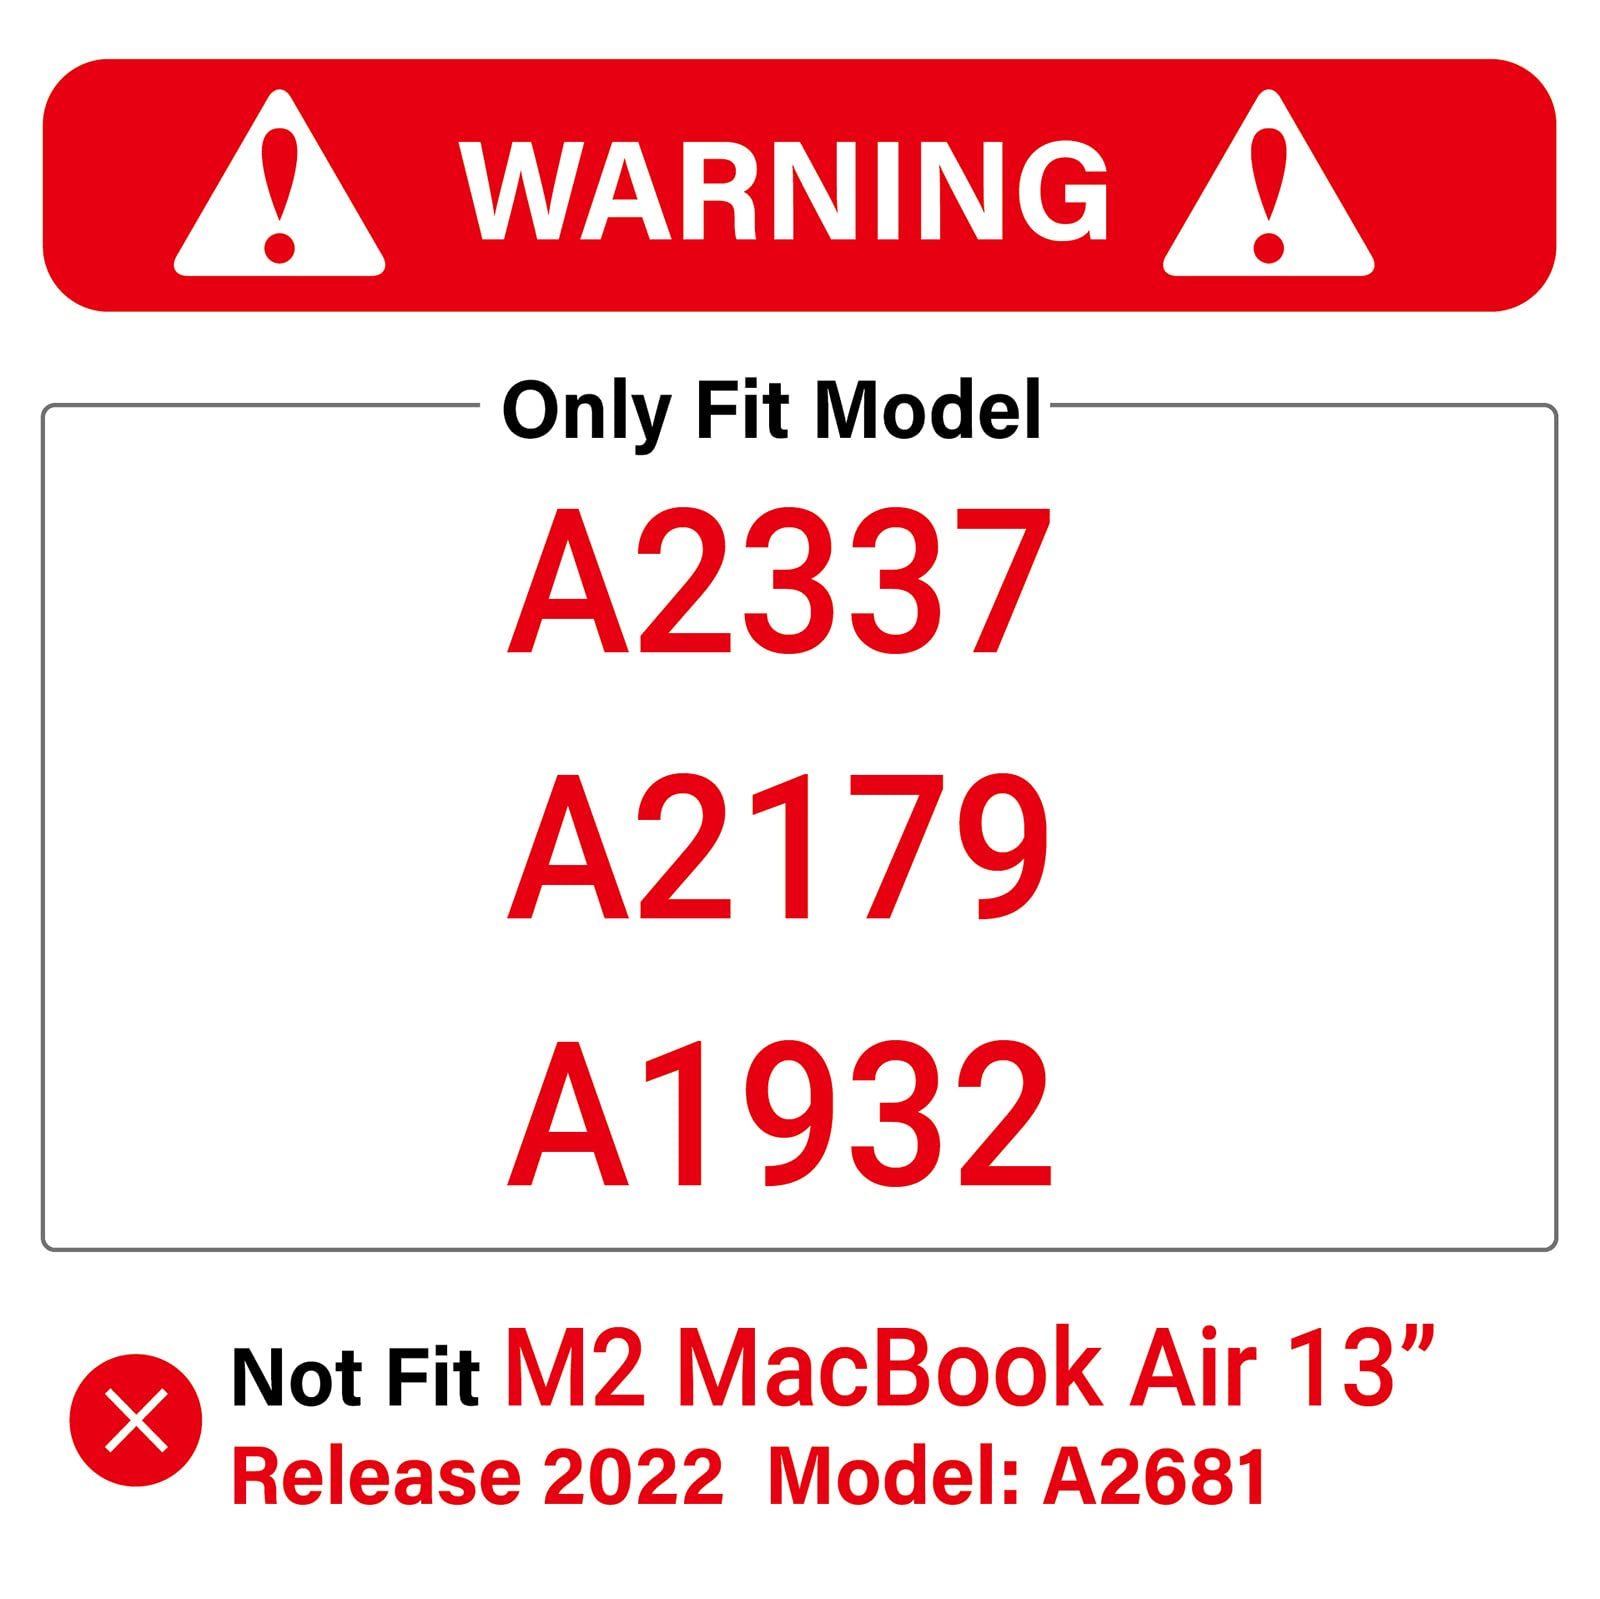 MacBook Air 13 Inch Case 2020 2019 2018, A1932, A2179, A2337 Shell Case Keyboard Cover Purple